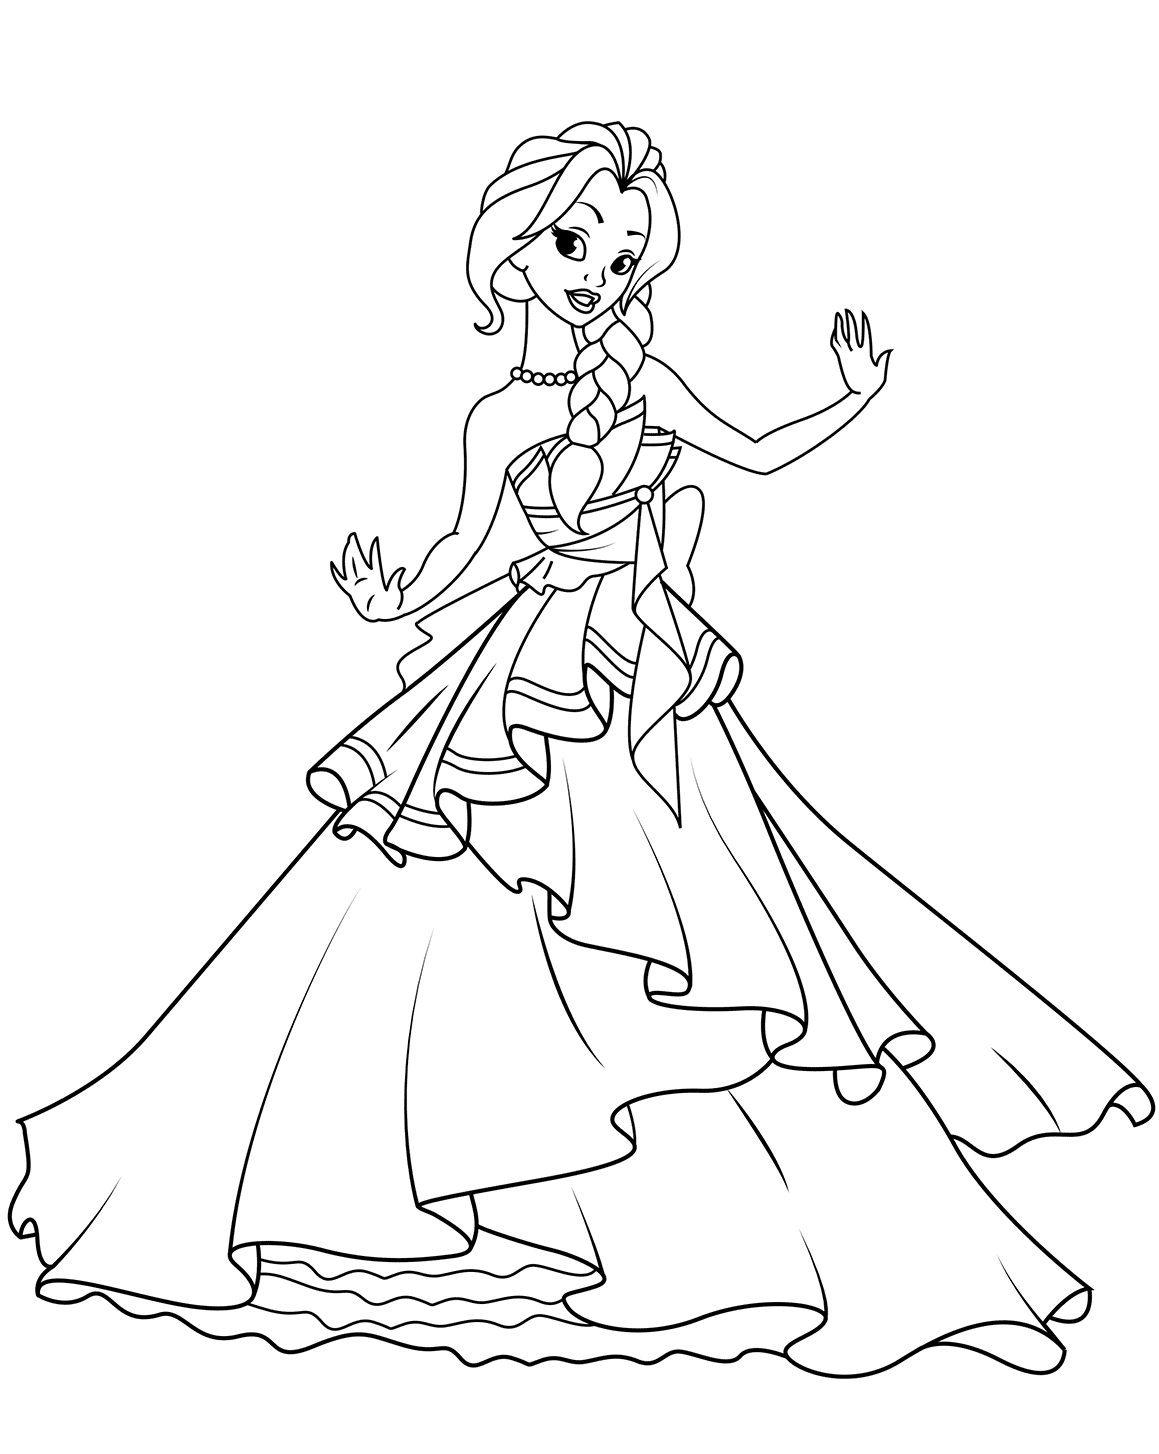 Dancing Princess Having Fun Coloring Page